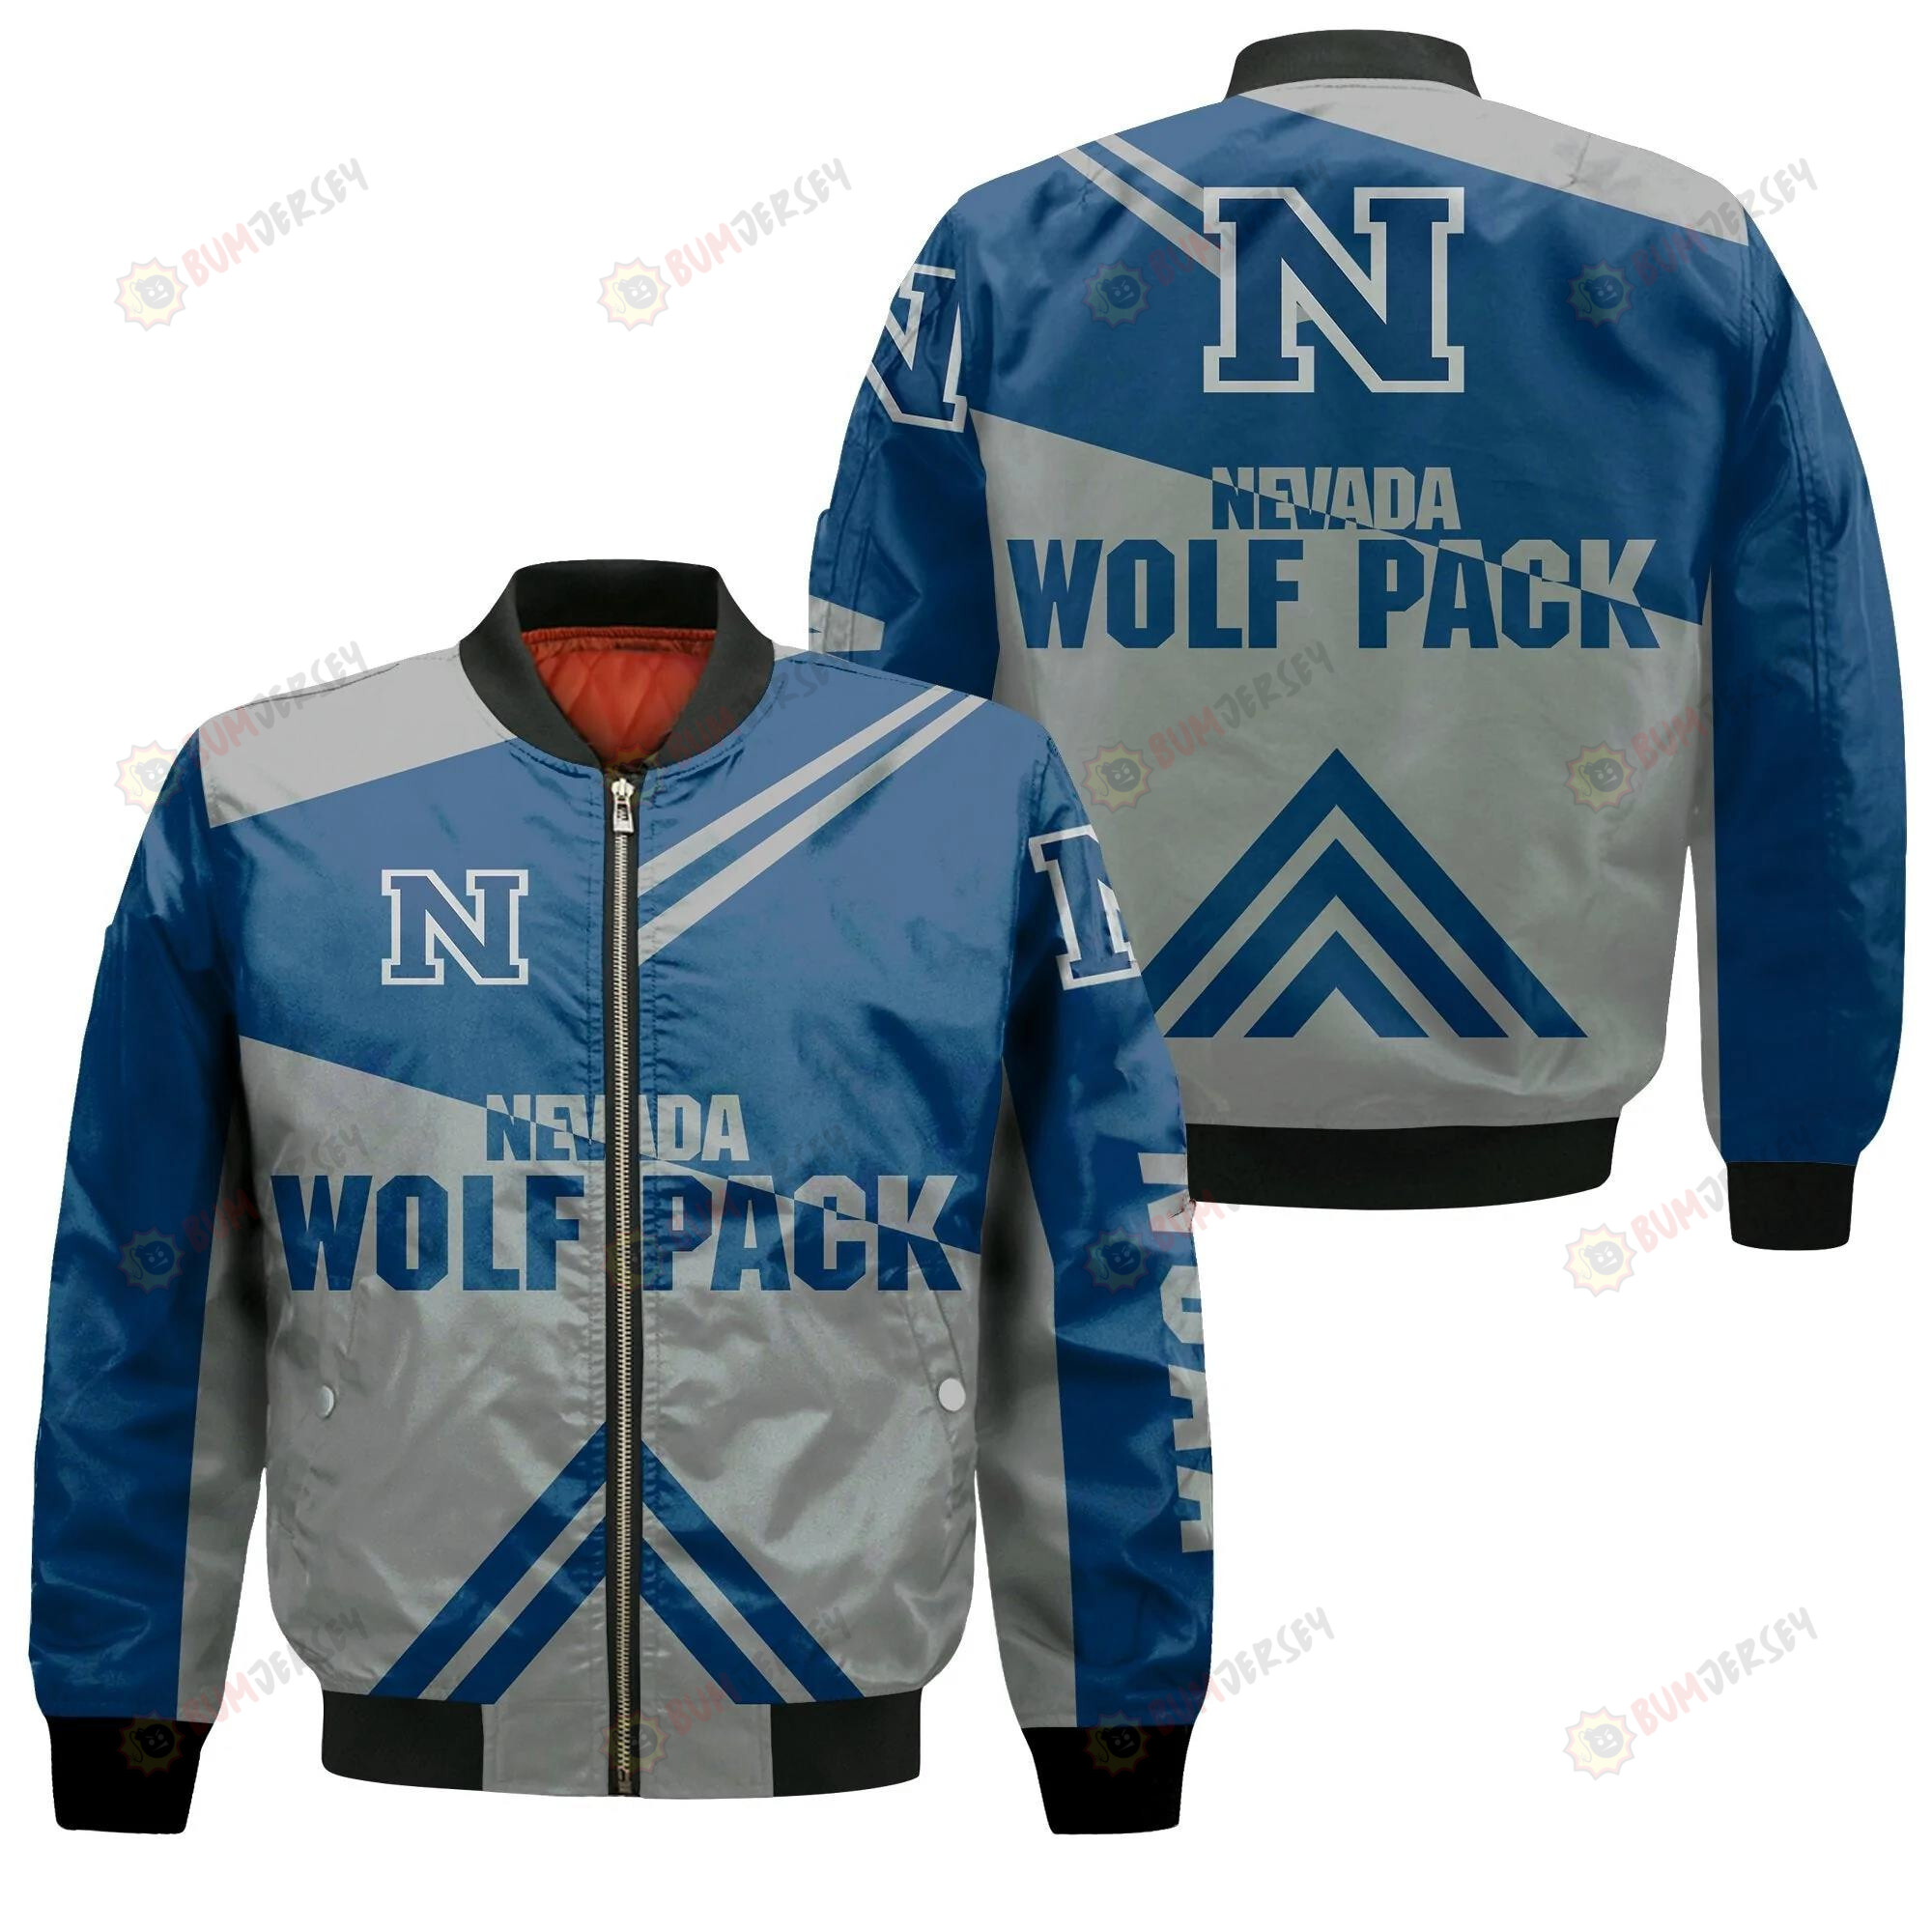 Nevada Wolf Pack Football Bomber Jacket 3D Printed - Stripes Cross Shoulders